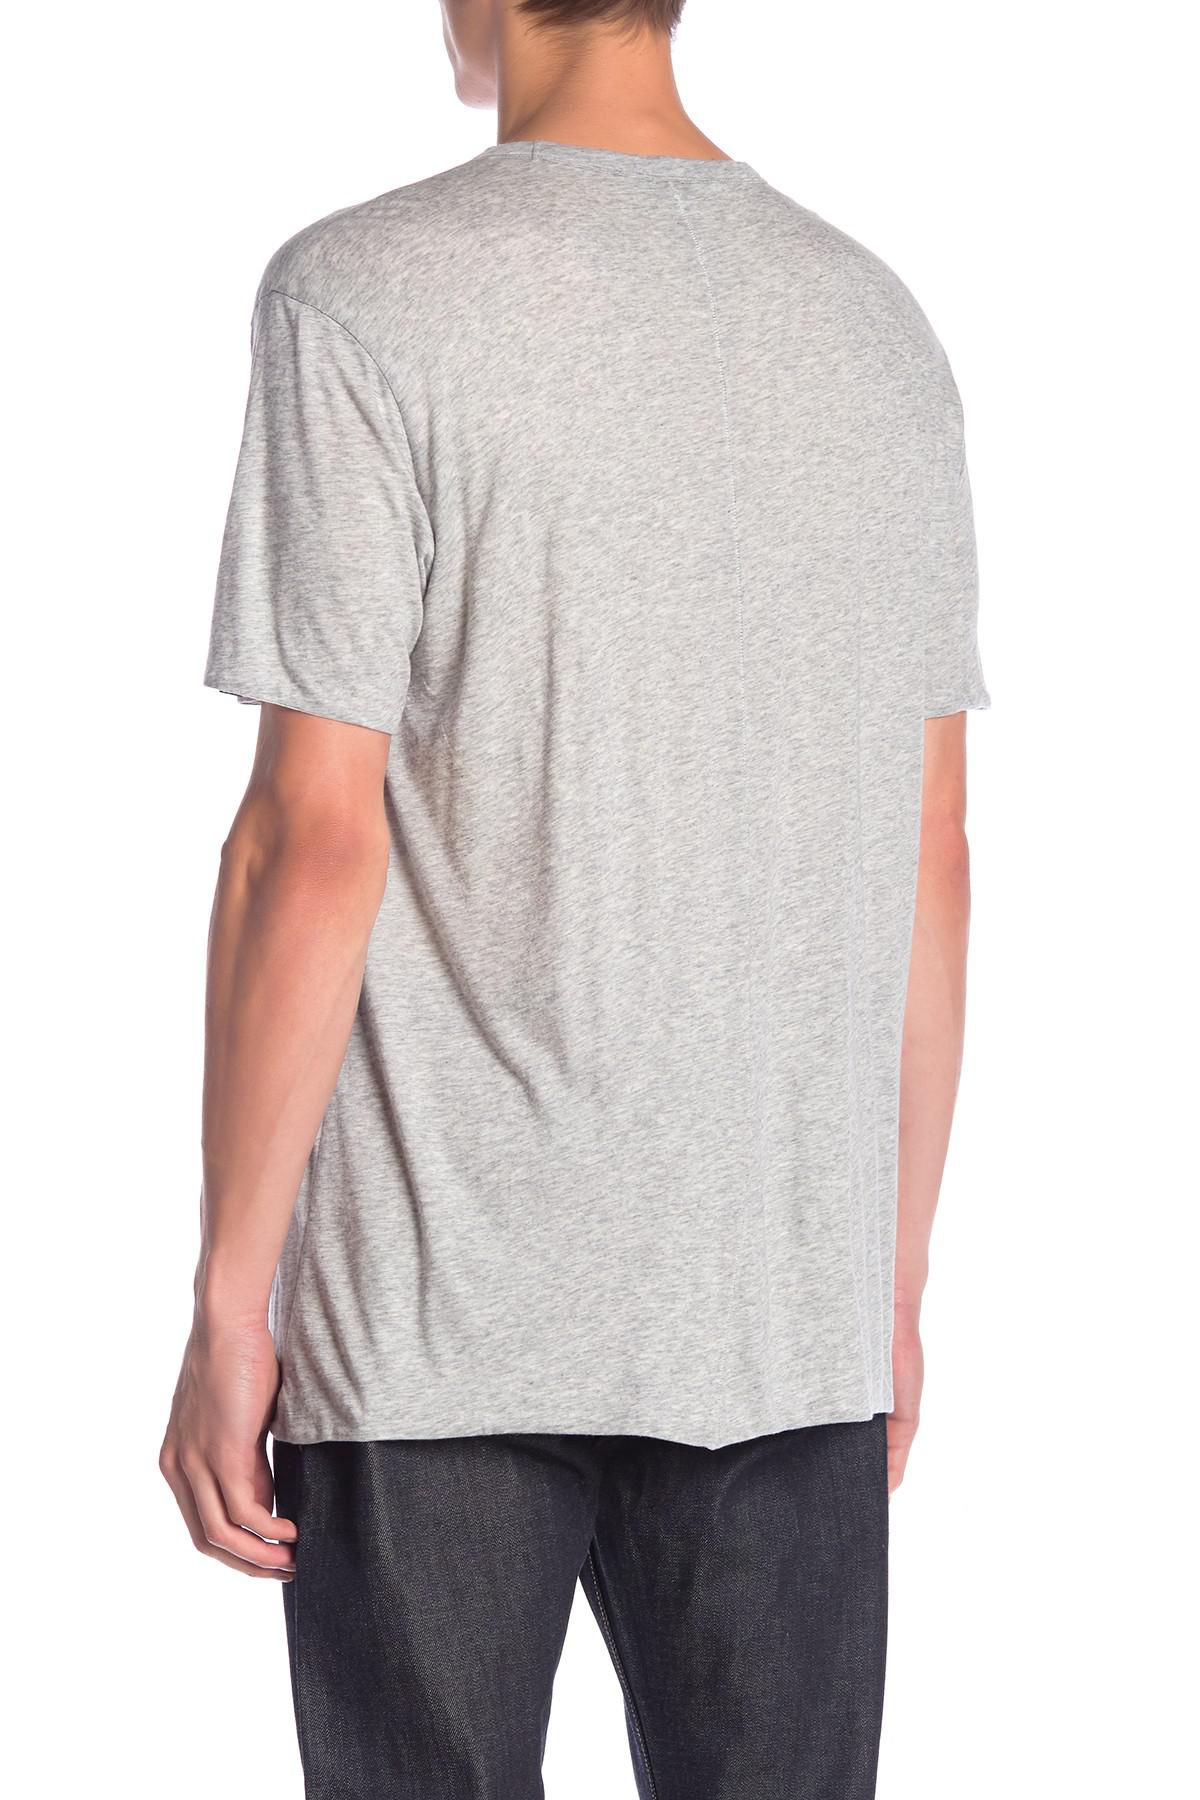 Rag & Bone Cotton Reversible T-shirt in Ivory/Grey (Gray) for Men - Lyst